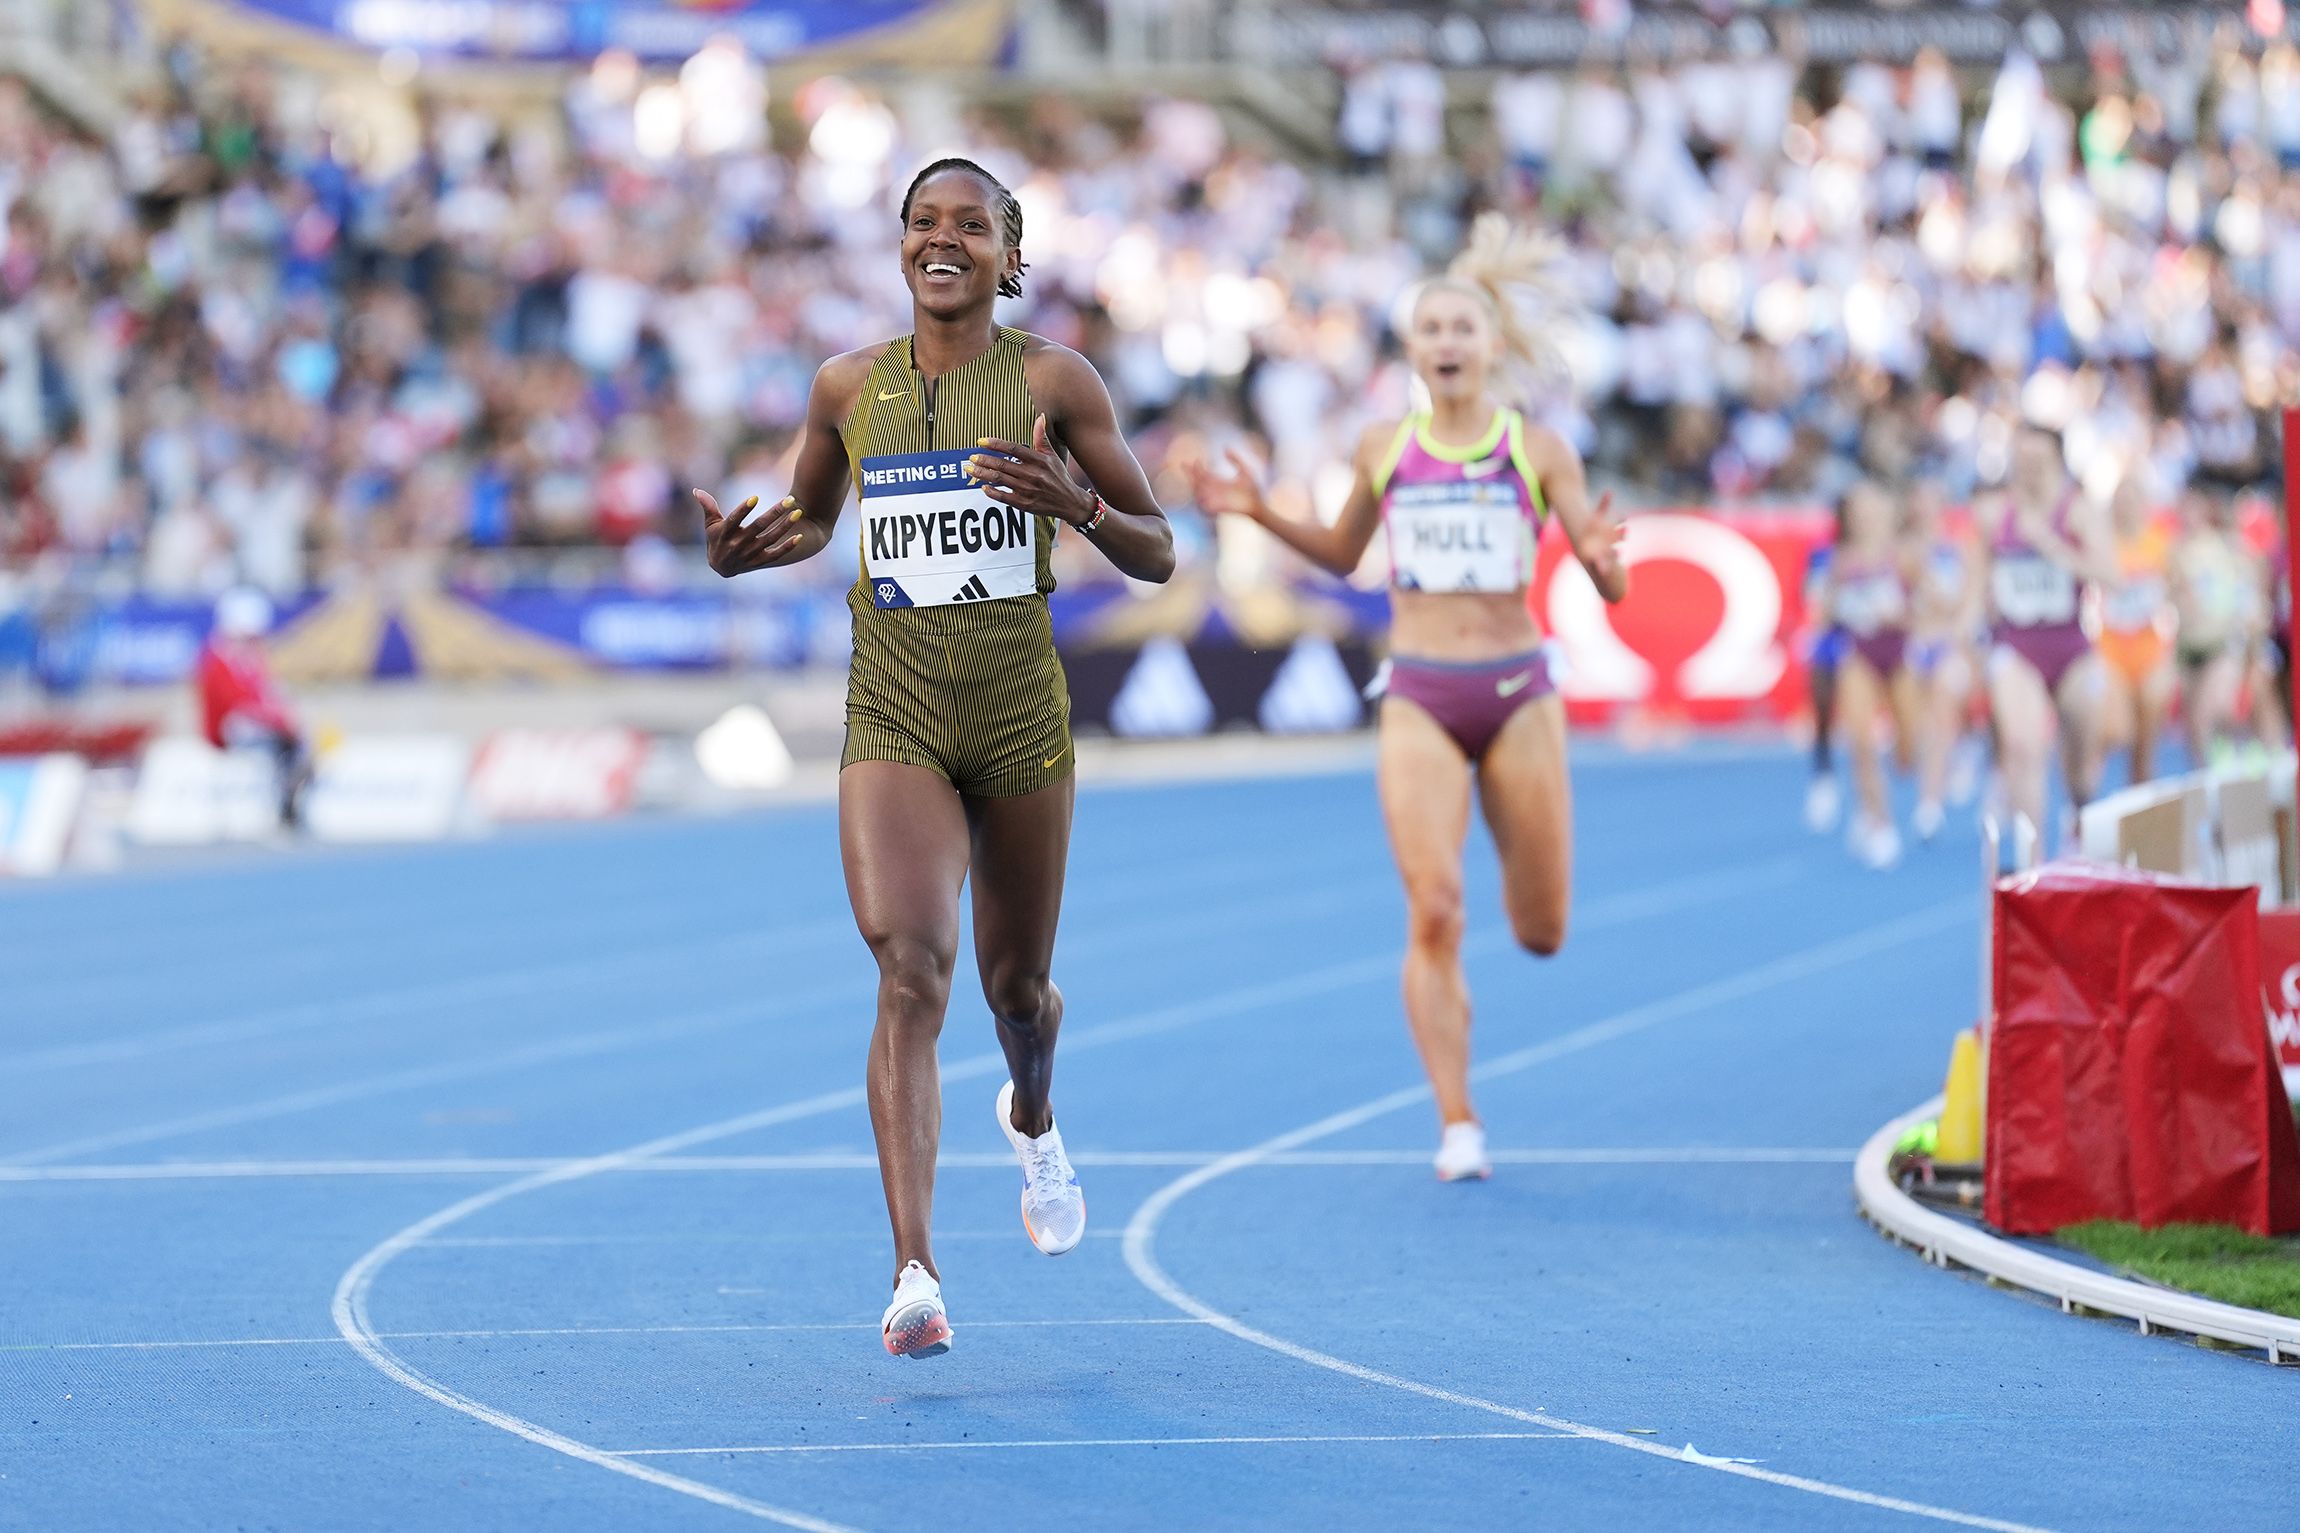 Faith Kipyegon wins the 1500m in Paris